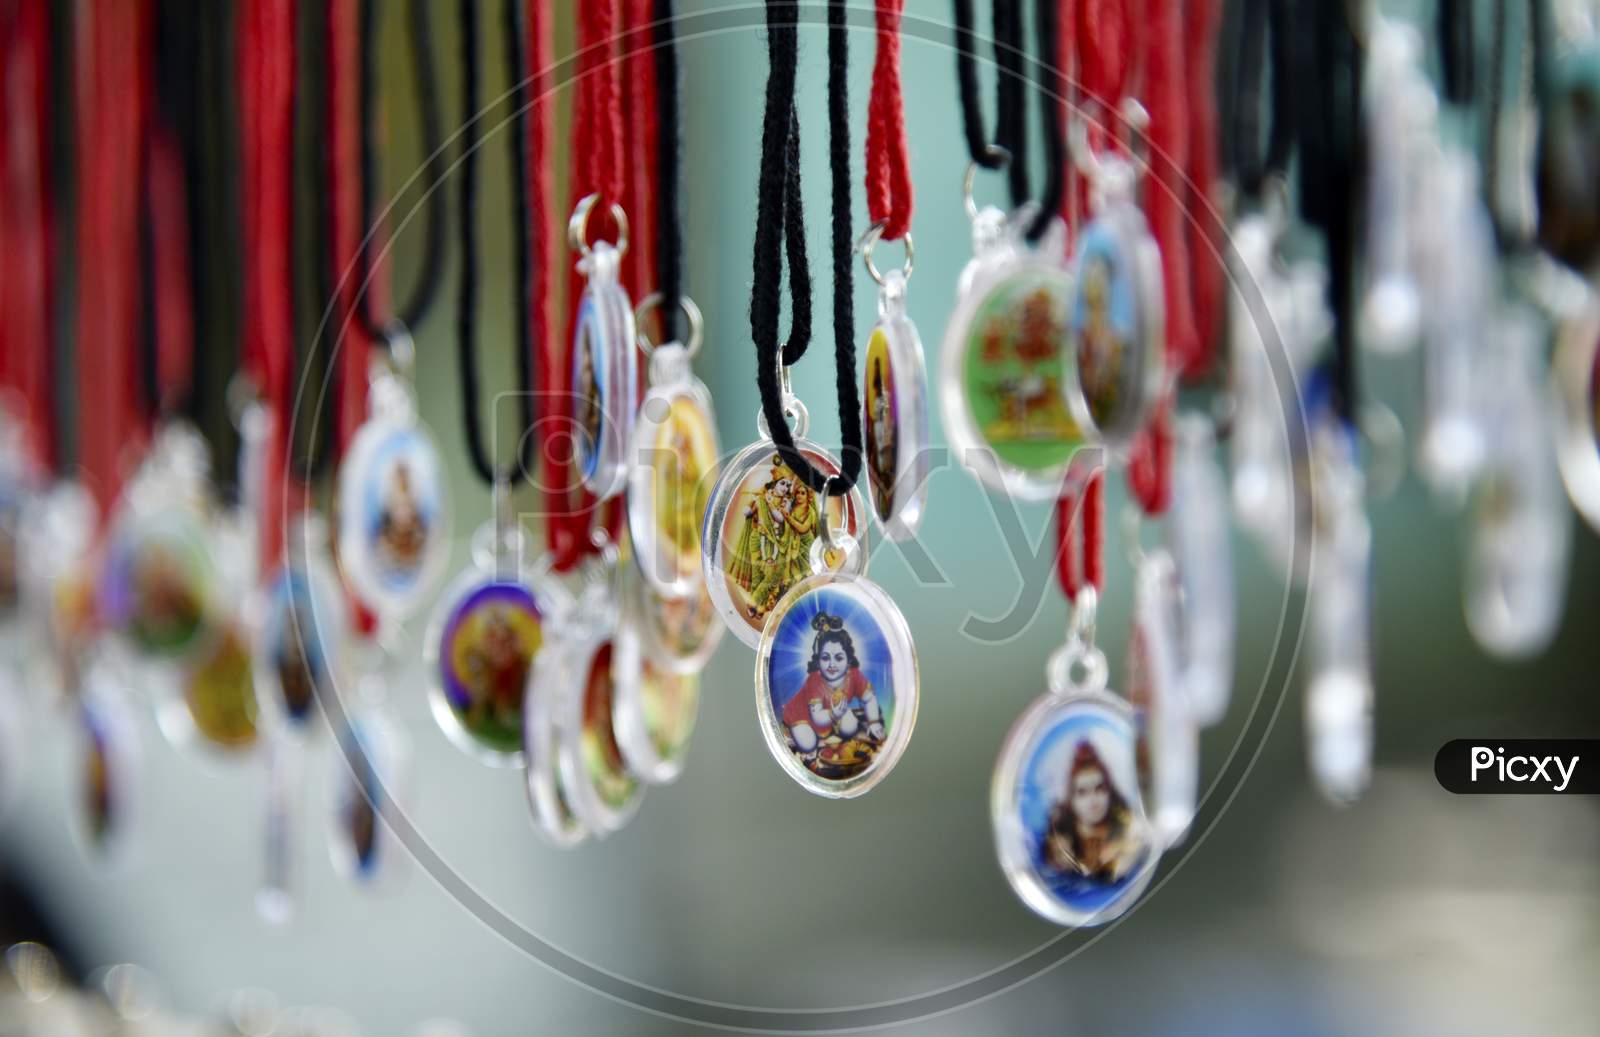 Lockets of Hindu God Selling in Vendor Stalls At Hindu Temples